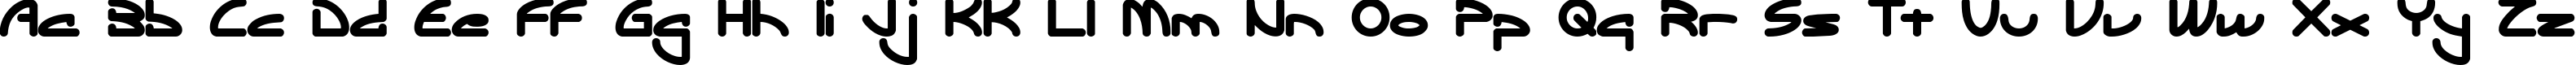 Пример написания английского алфавита шрифтом Ecliptic BRK